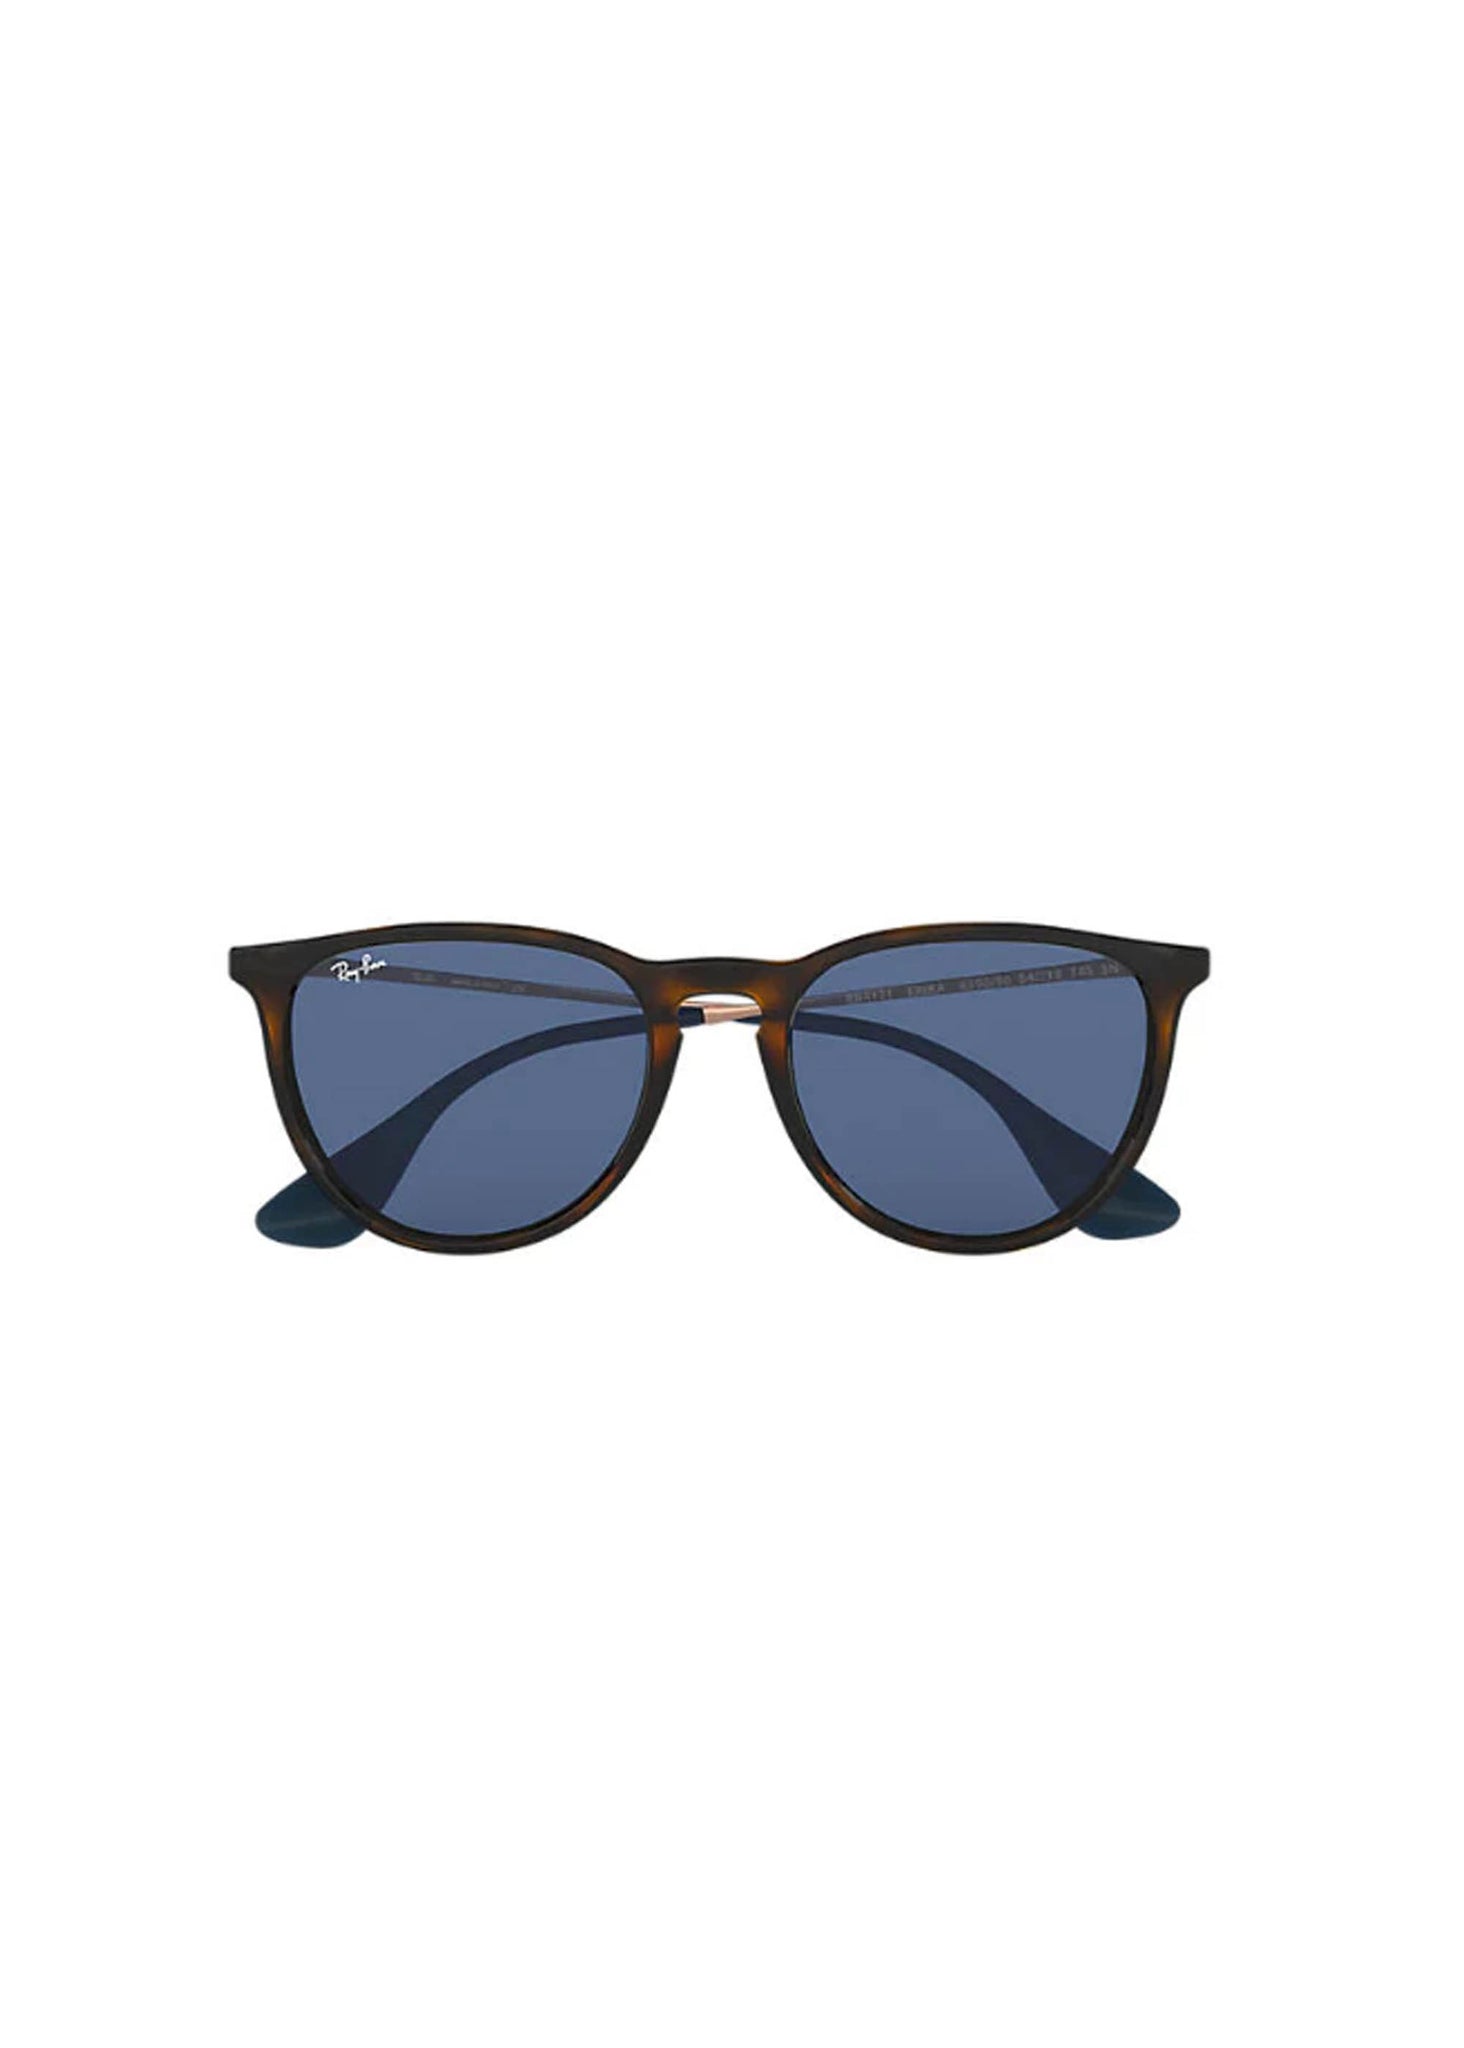 Raybans Erika Nylon Unisex Sunglasses - Dark Blue